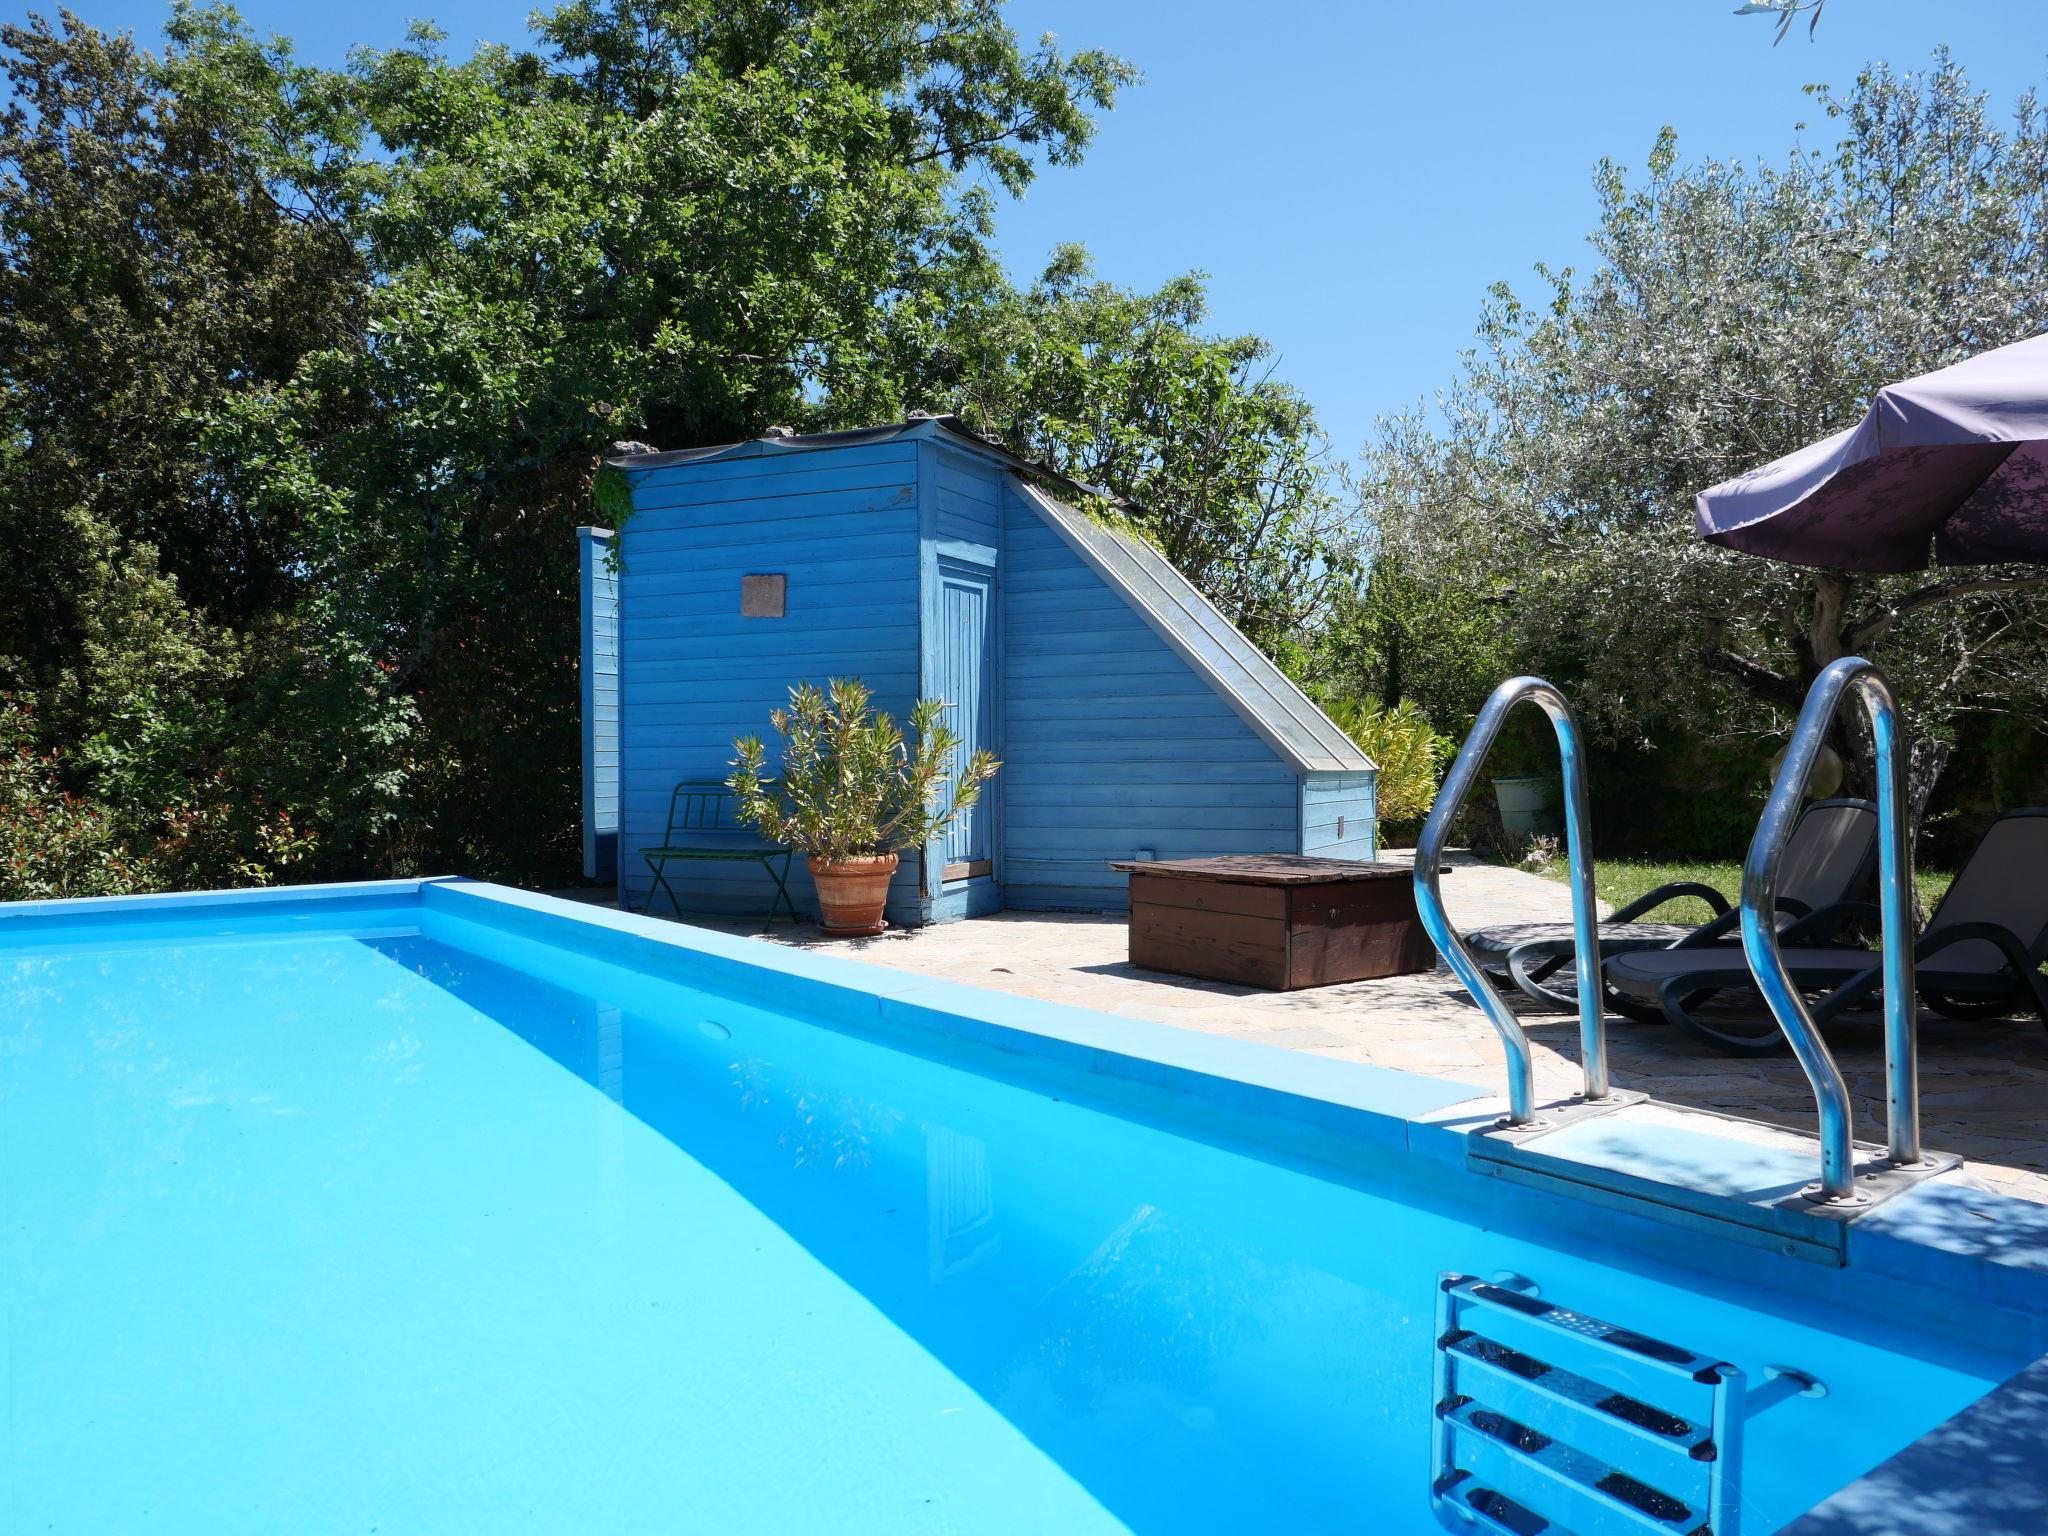 Foto 2 - Casa con 1 camera da letto a Montieri con piscina e giardino